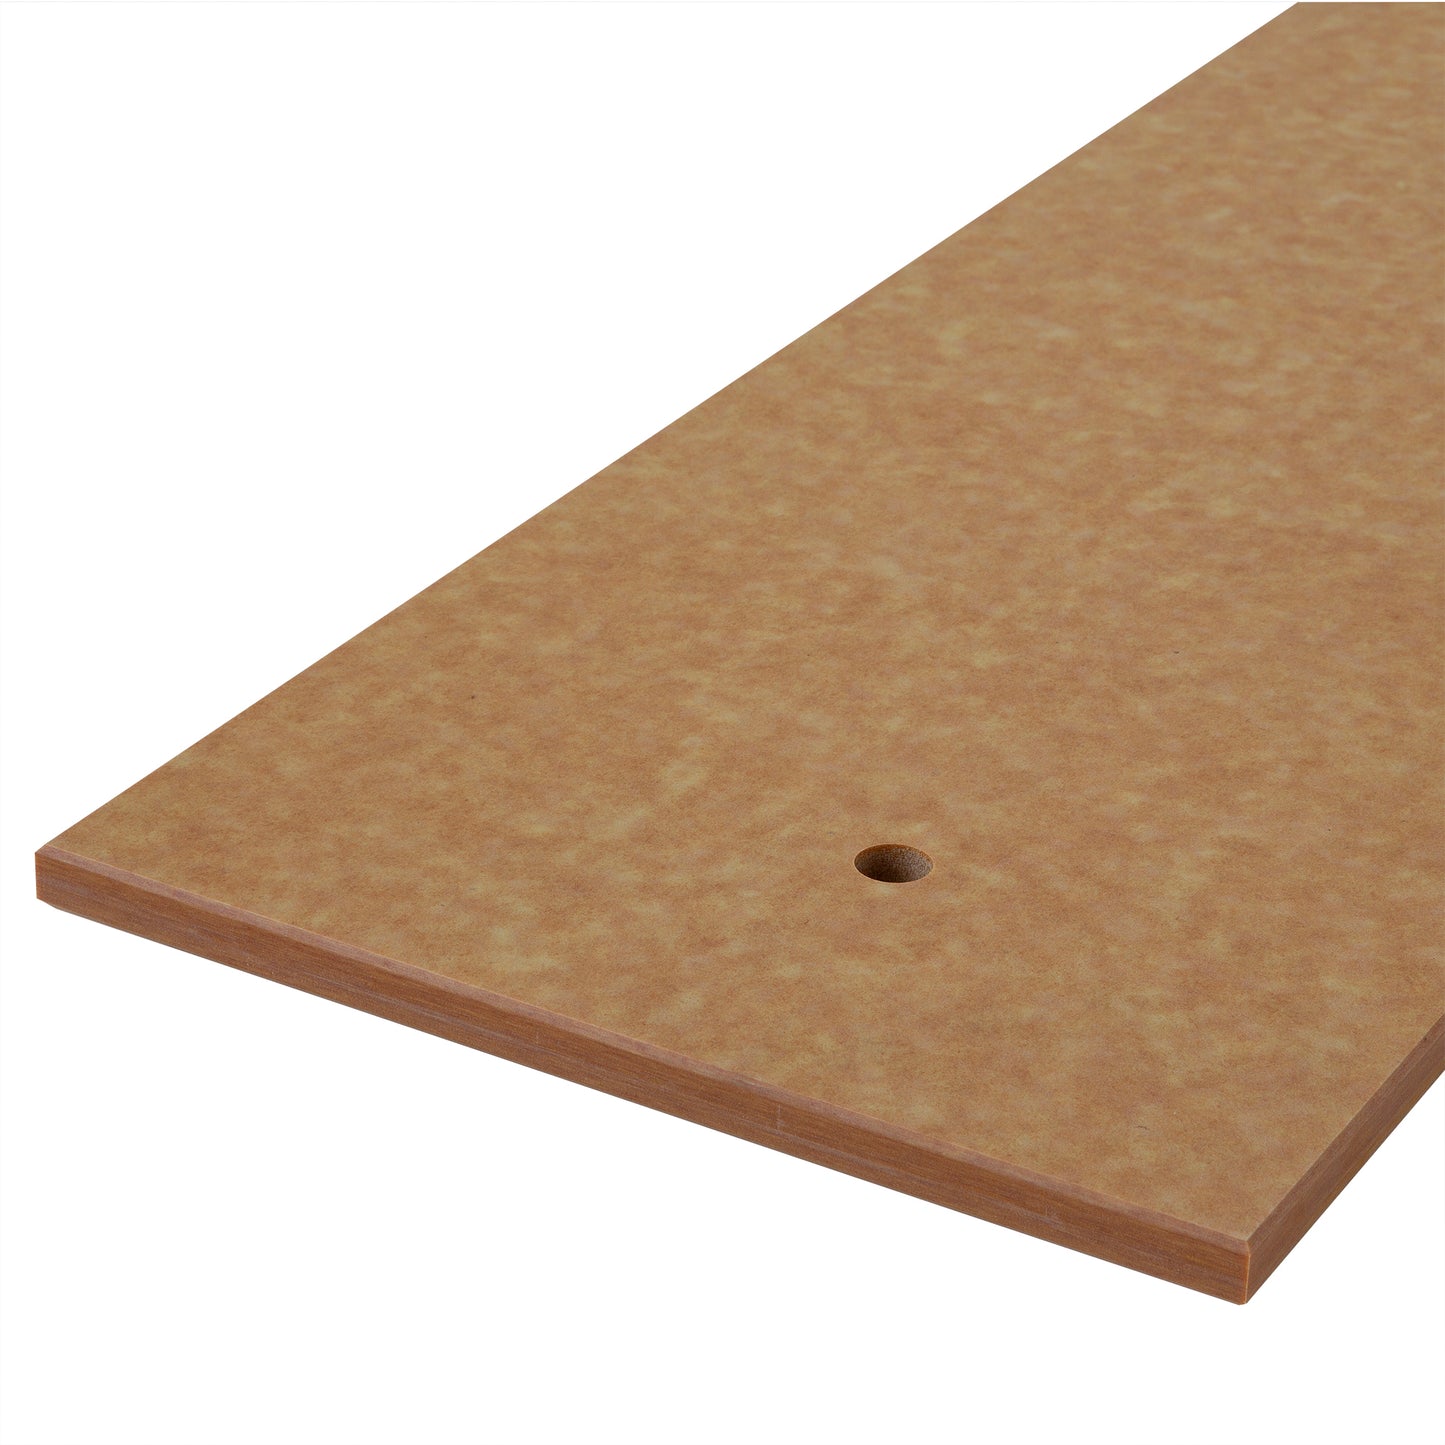 Composite wood-tone cutting board. 1/2" X 11-3/4" X 48". All TSSU-48 models.(SKU - 820610)